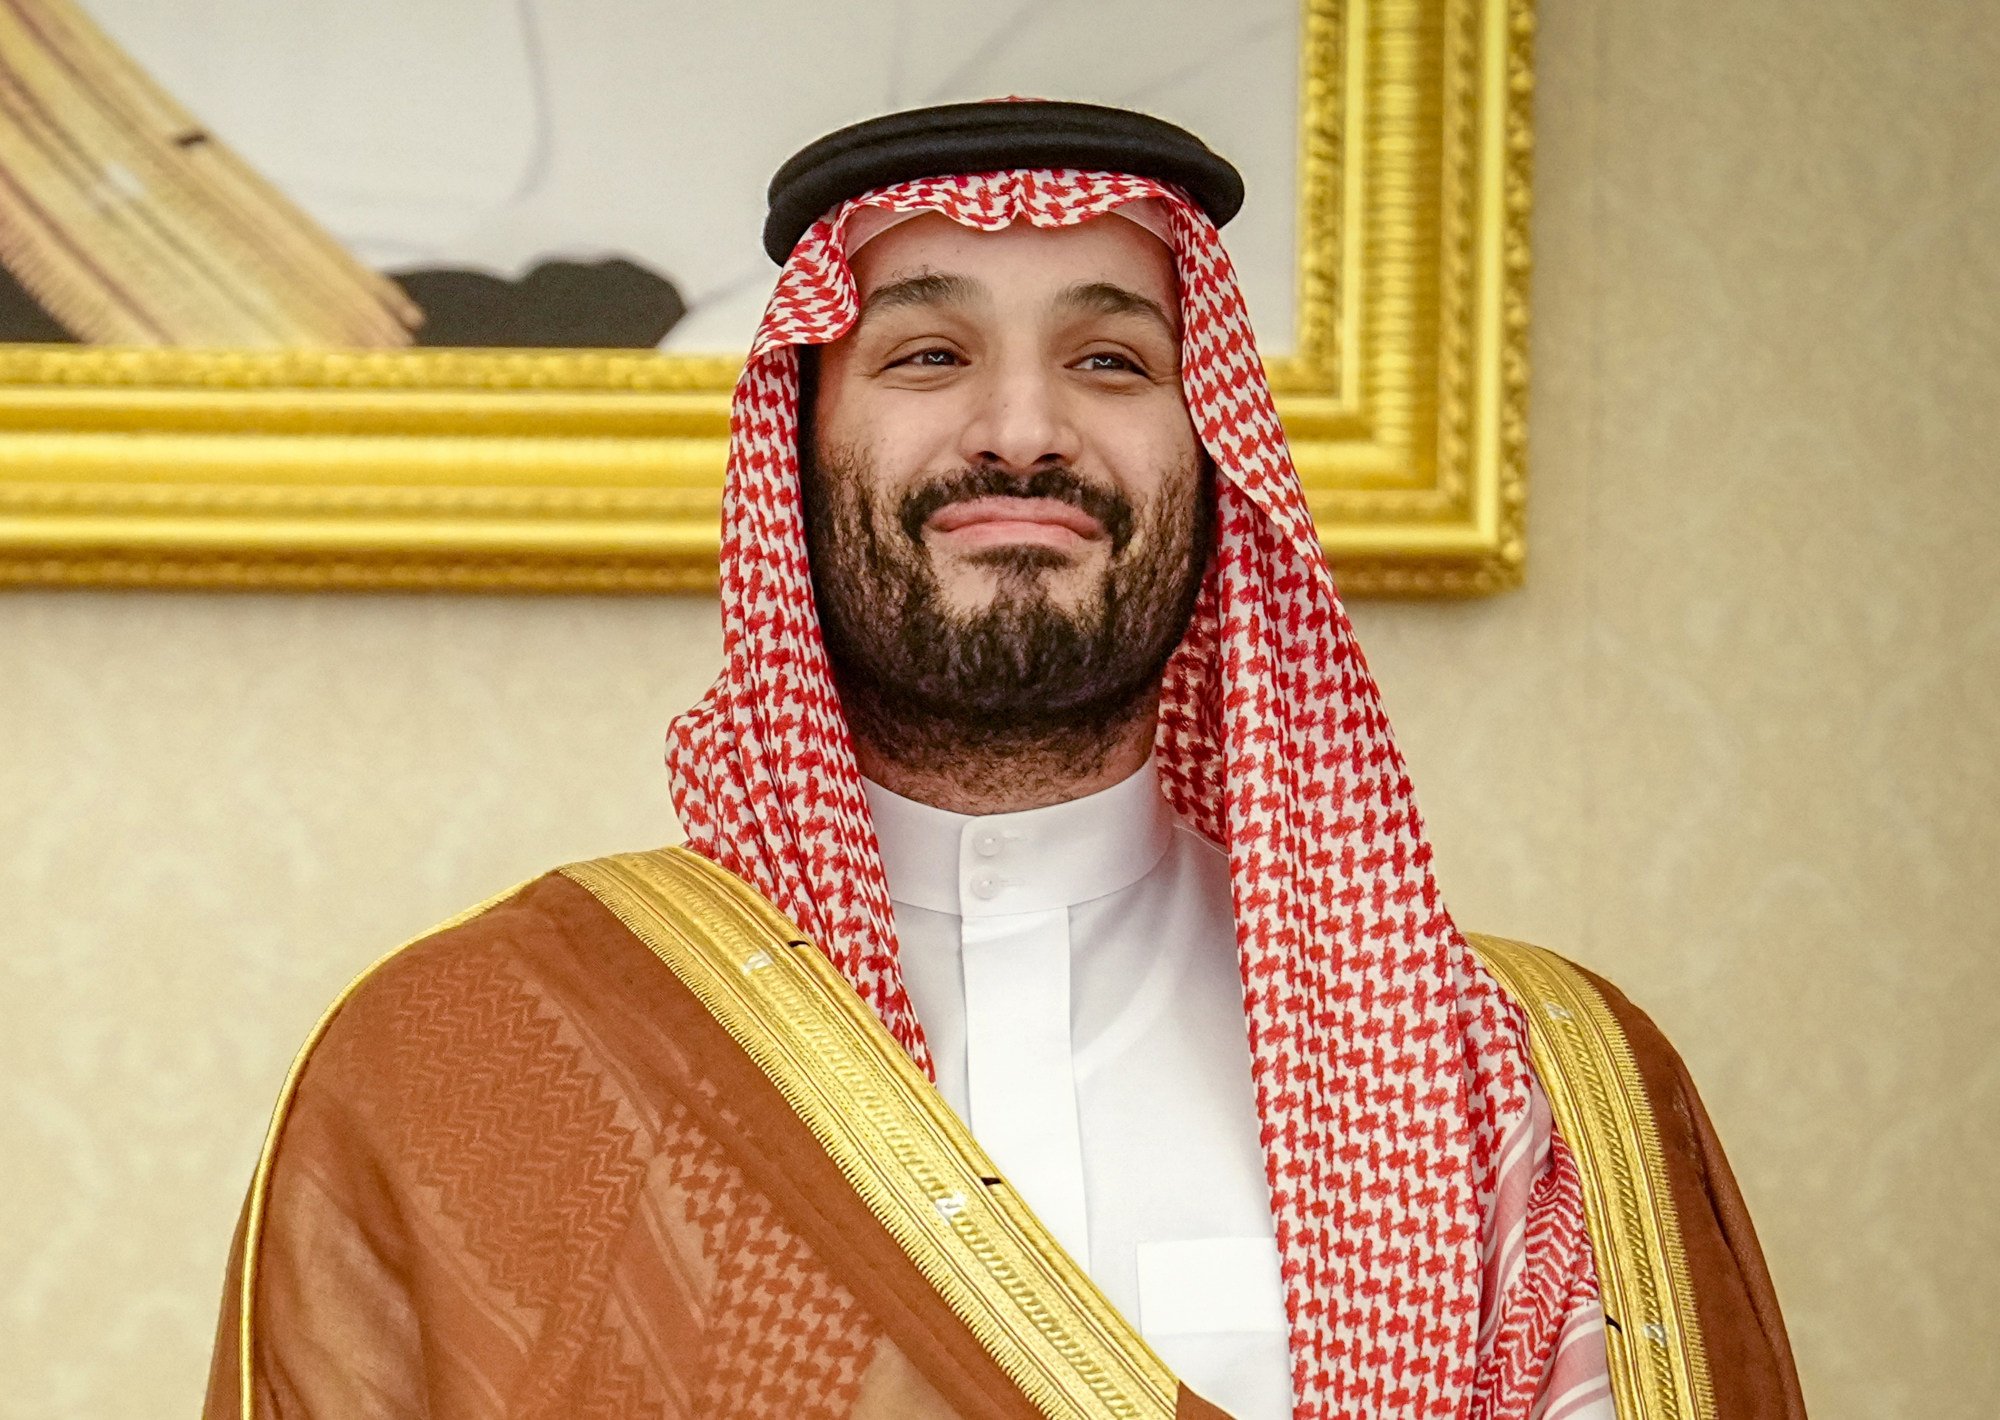 Принцы аль сауды. Мохаммед Бен Салман. Мухаммед ибн Салман Аль Сауд. Наследный принц Саудовской Аравии Мухаммед Бен Салман. Наследный принц ОАЭ Мухаммед ибн Салман..